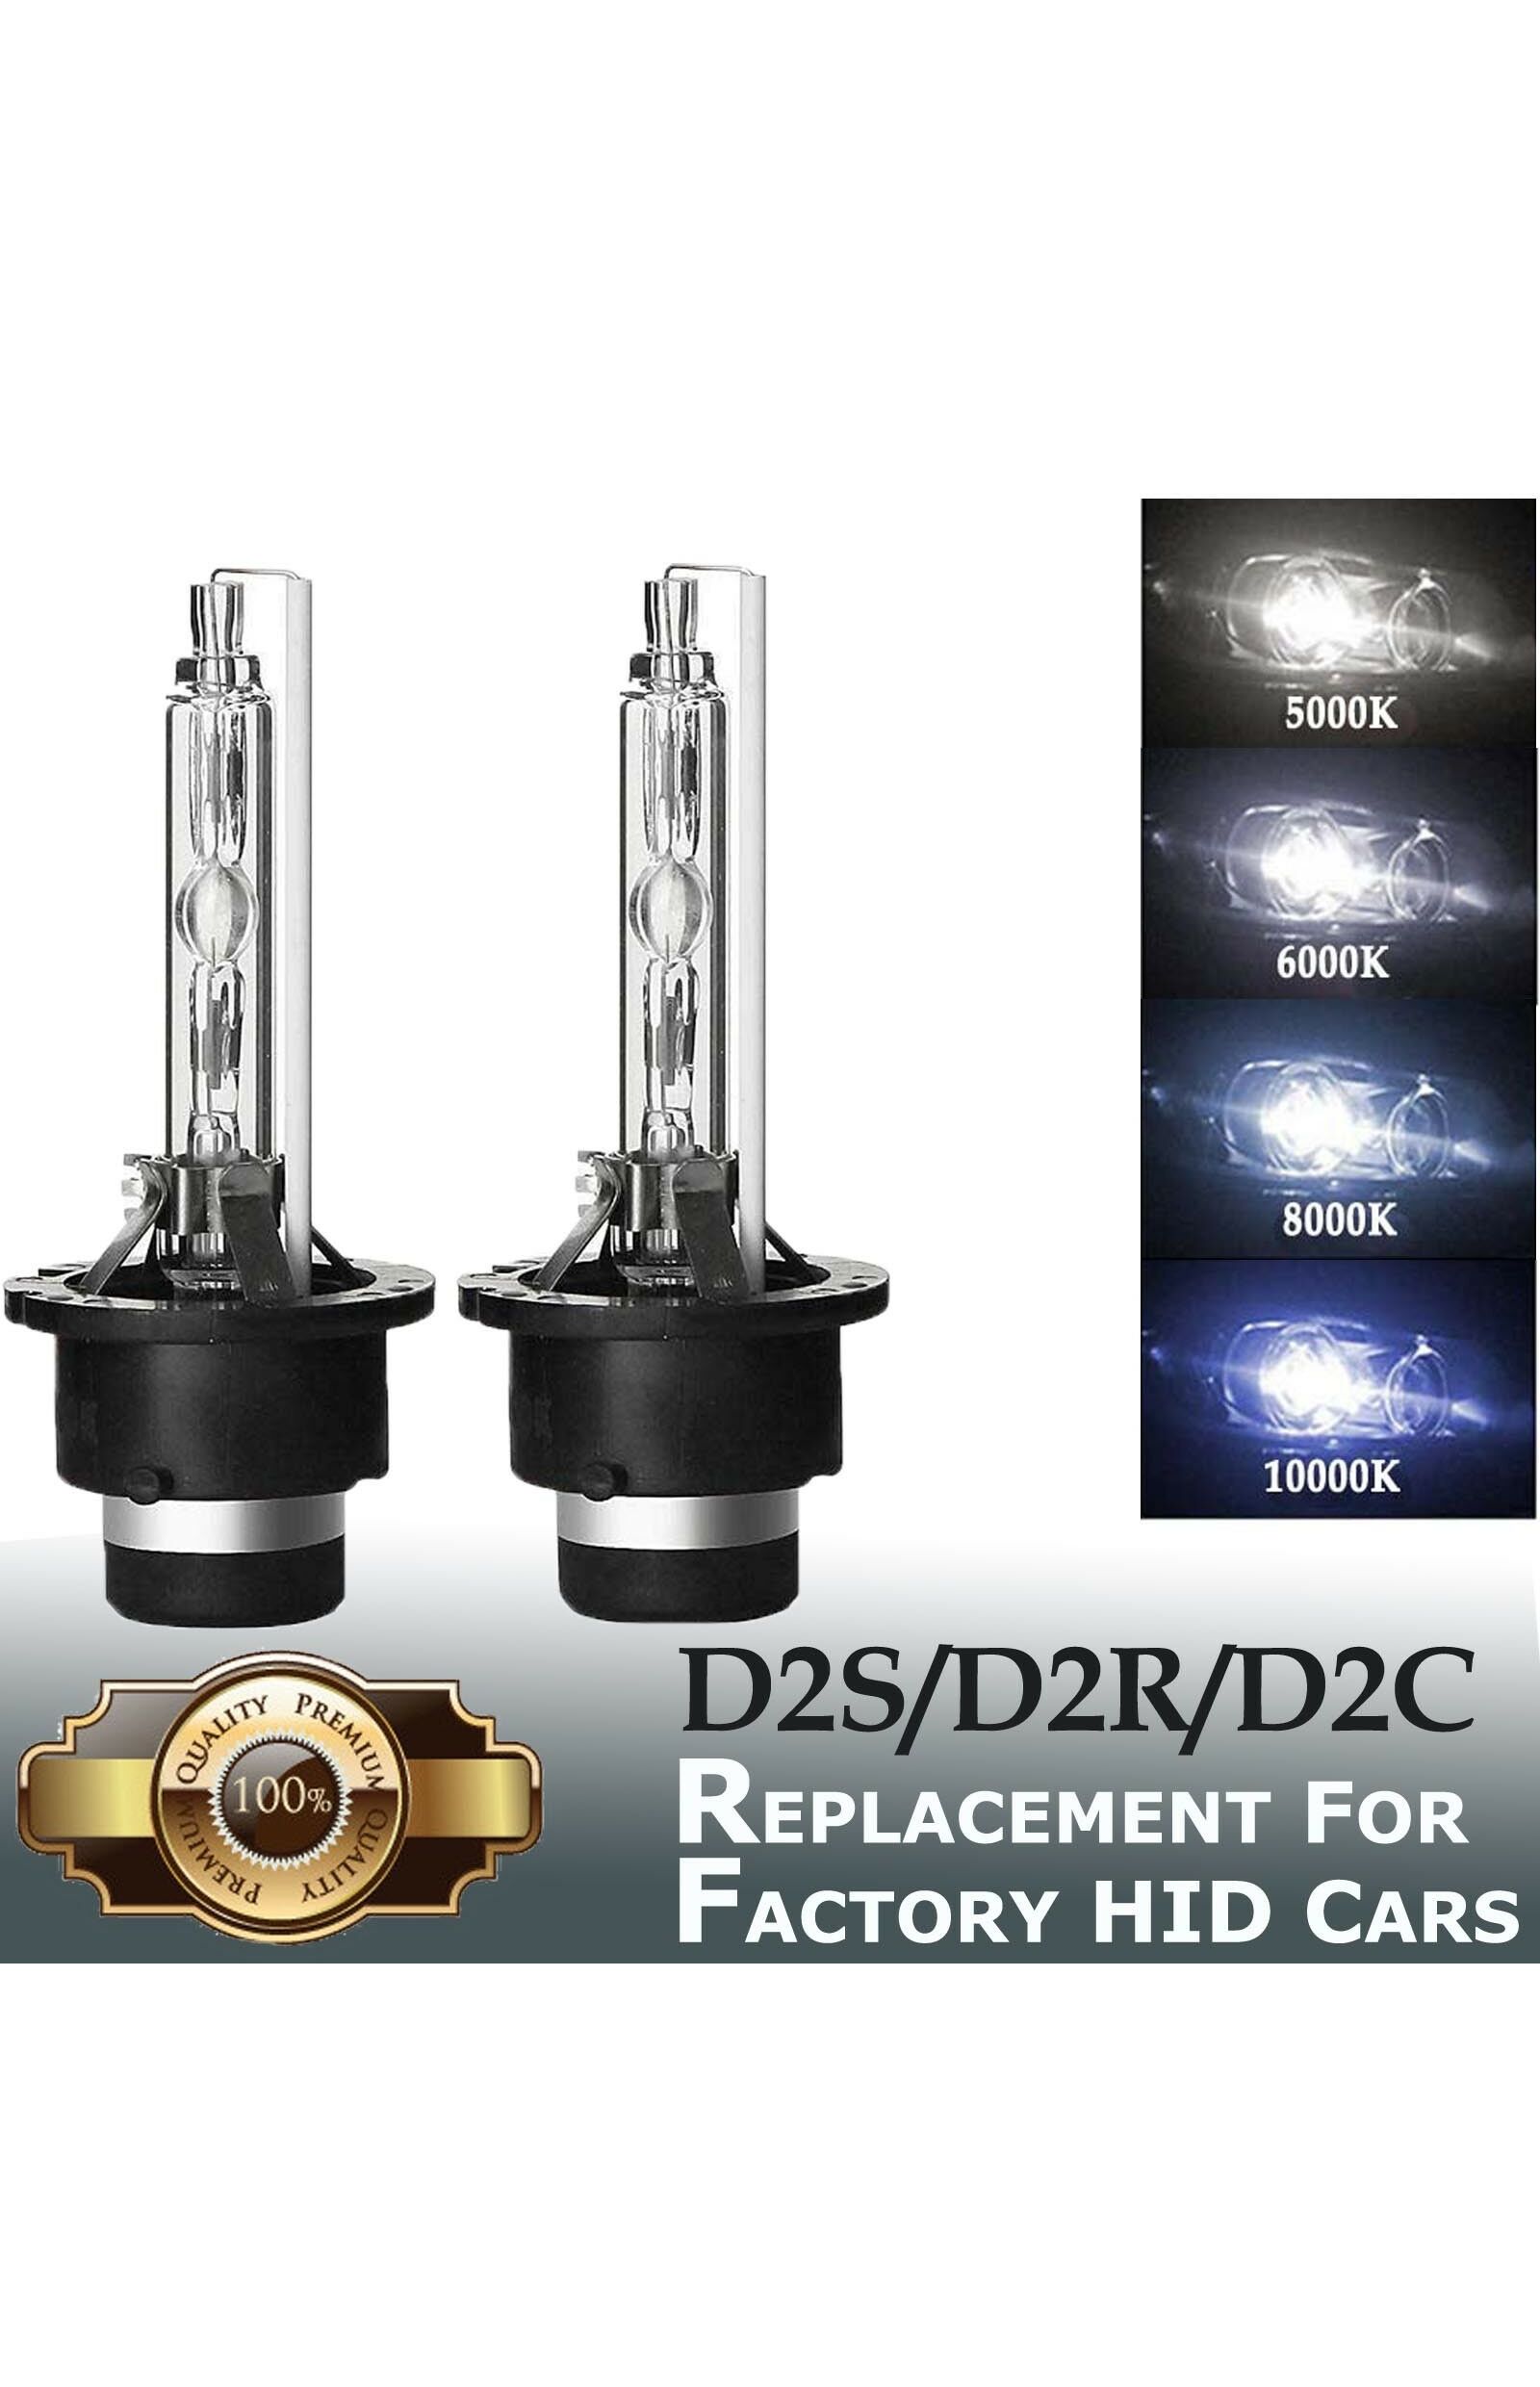 Details about   2X 55W D2S D2R D2C HID XENON Headlight Bulbs OEM Lamp Low Bean 6000K White Light 